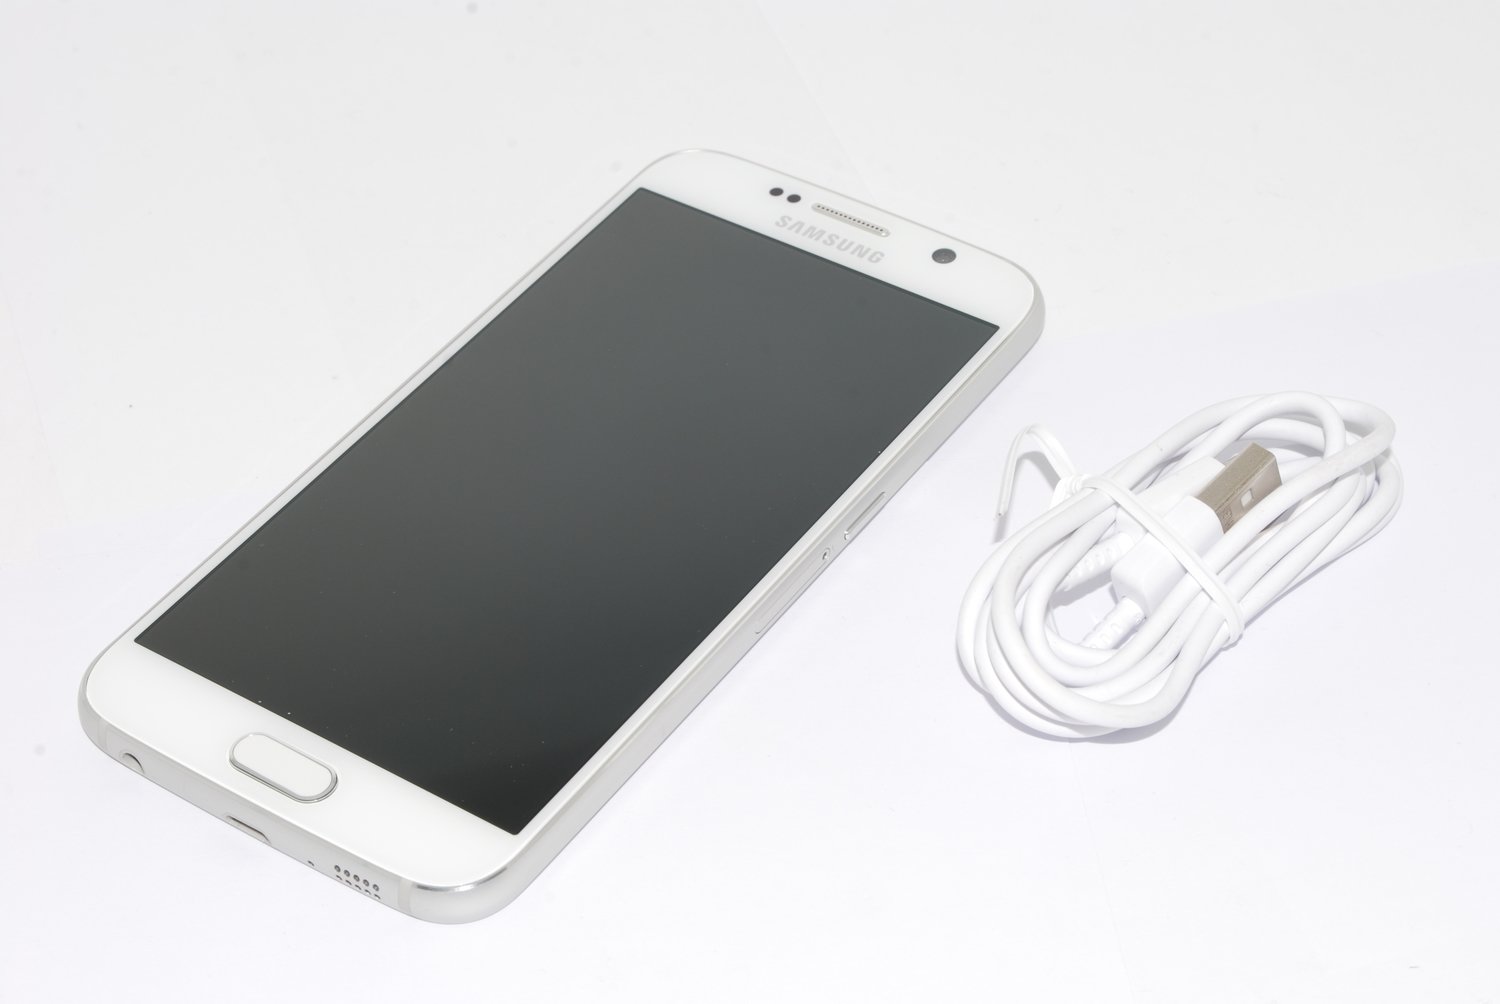 Samsung Galaxy White S6 SM-G920F Unlocked 32GB phone sim-free UK STOCK NO BOX